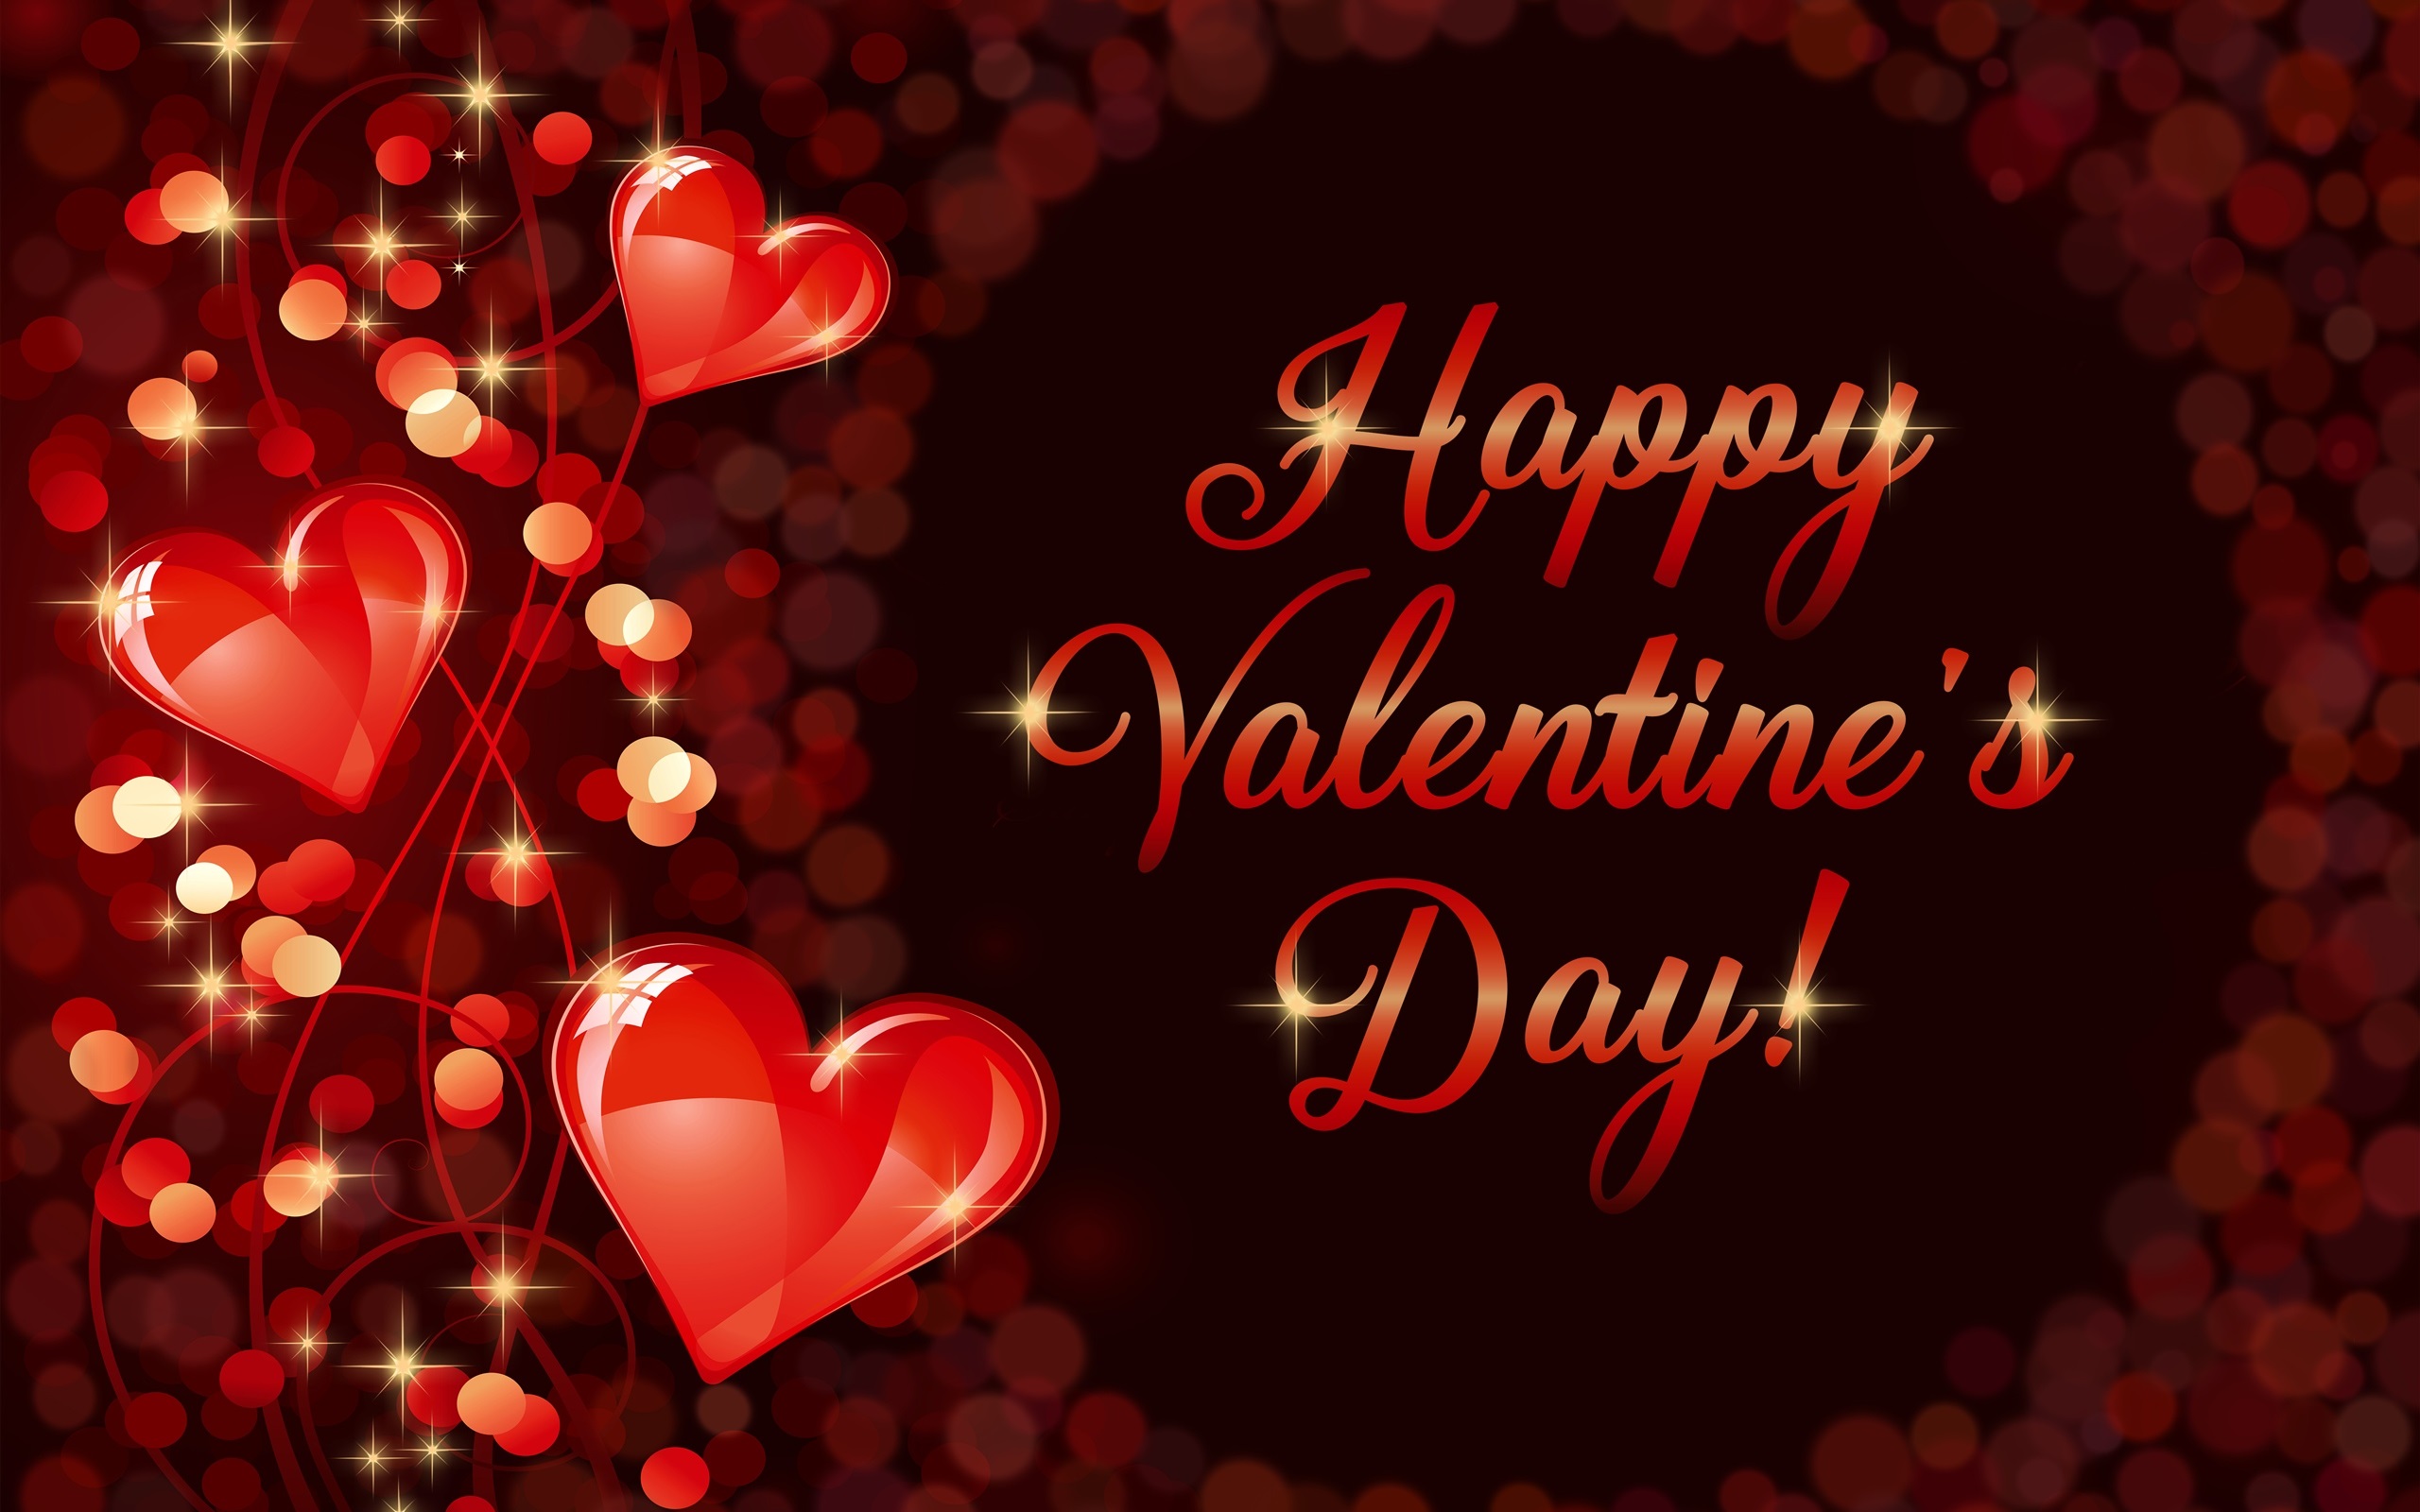 Happy Valentine's Day, romantic, love, hearts wallpaper | celebrations